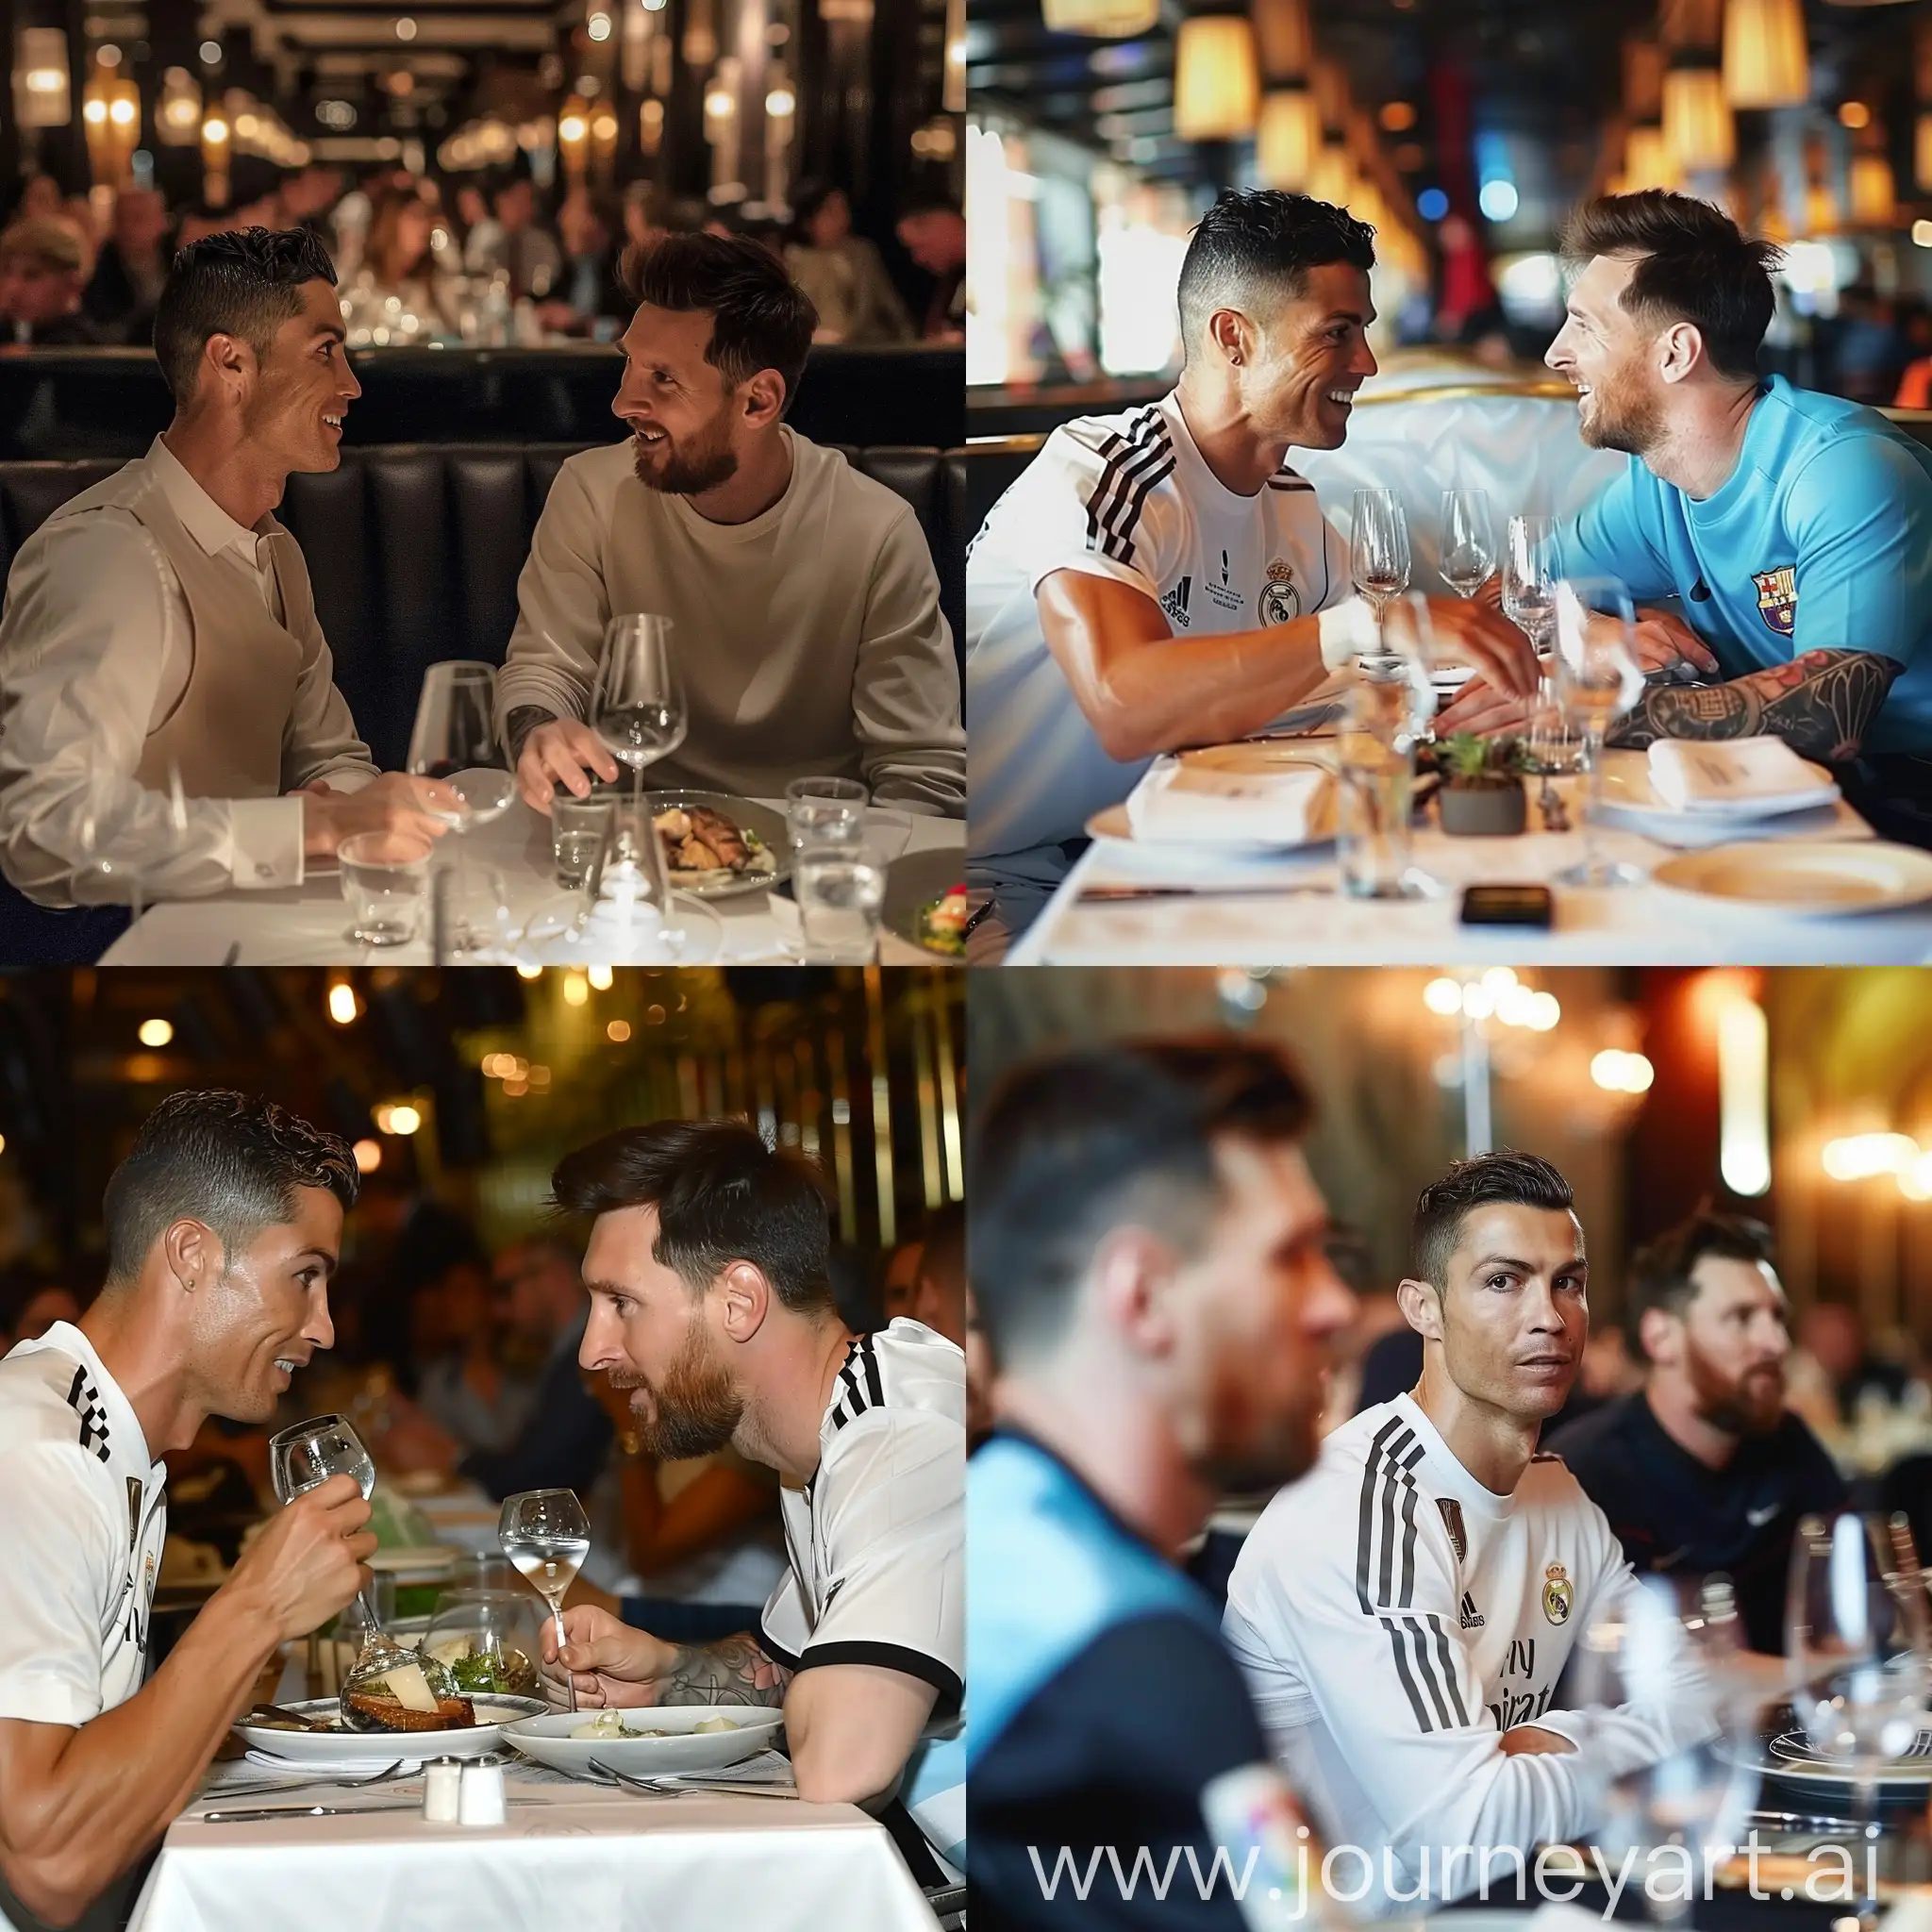 Cristiano-Ronaldo-and-Lionel-Messi-Dining-in-Luxury-Restaurant